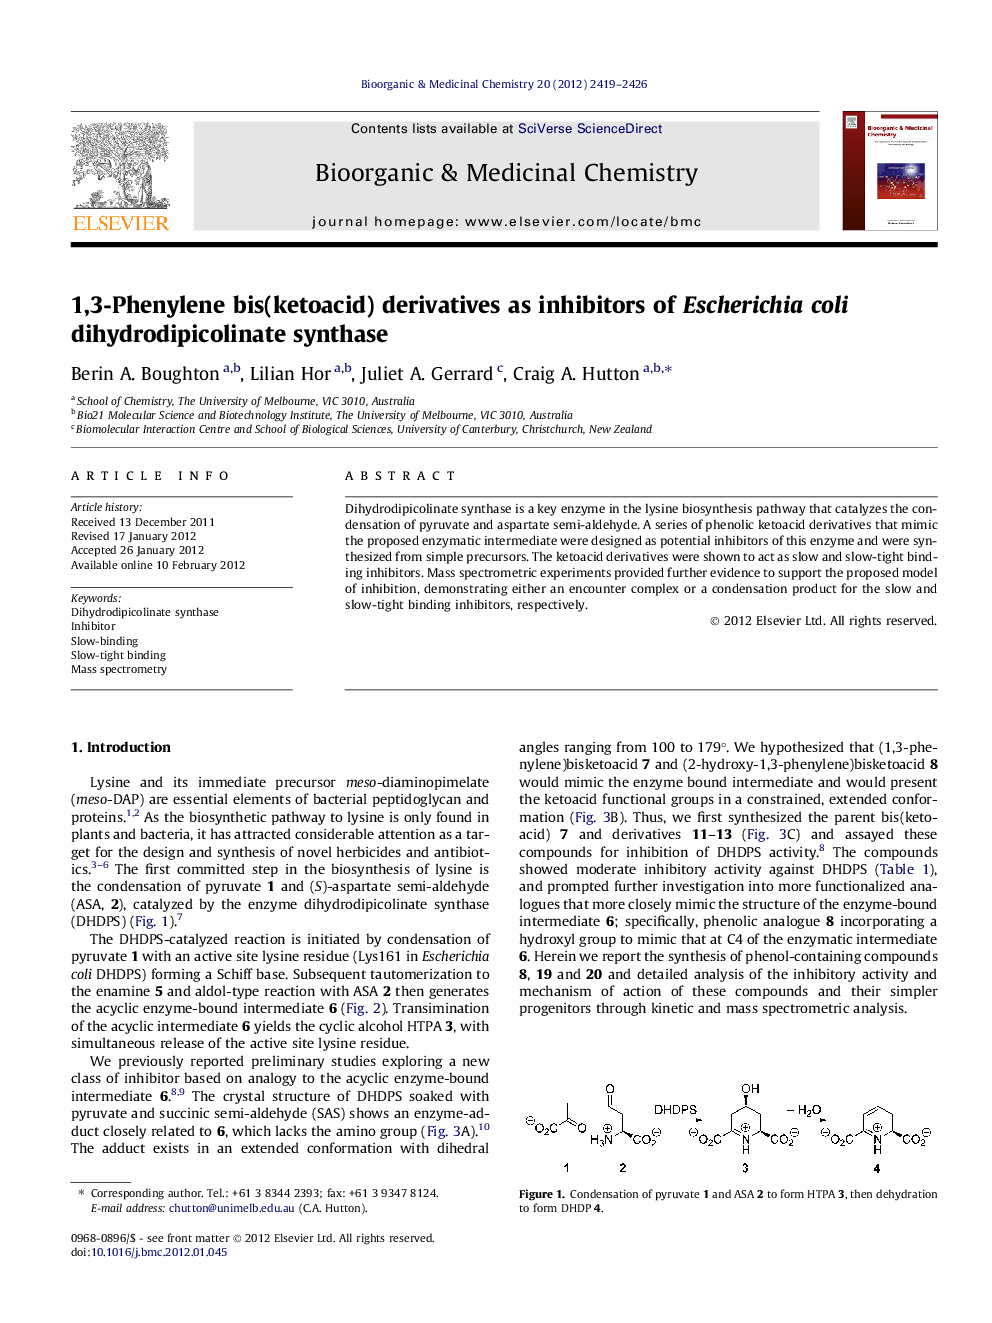 1,3-Phenylene bis(ketoacid) derivatives as inhibitors of Escherichia coli dihydrodipicolinate synthase